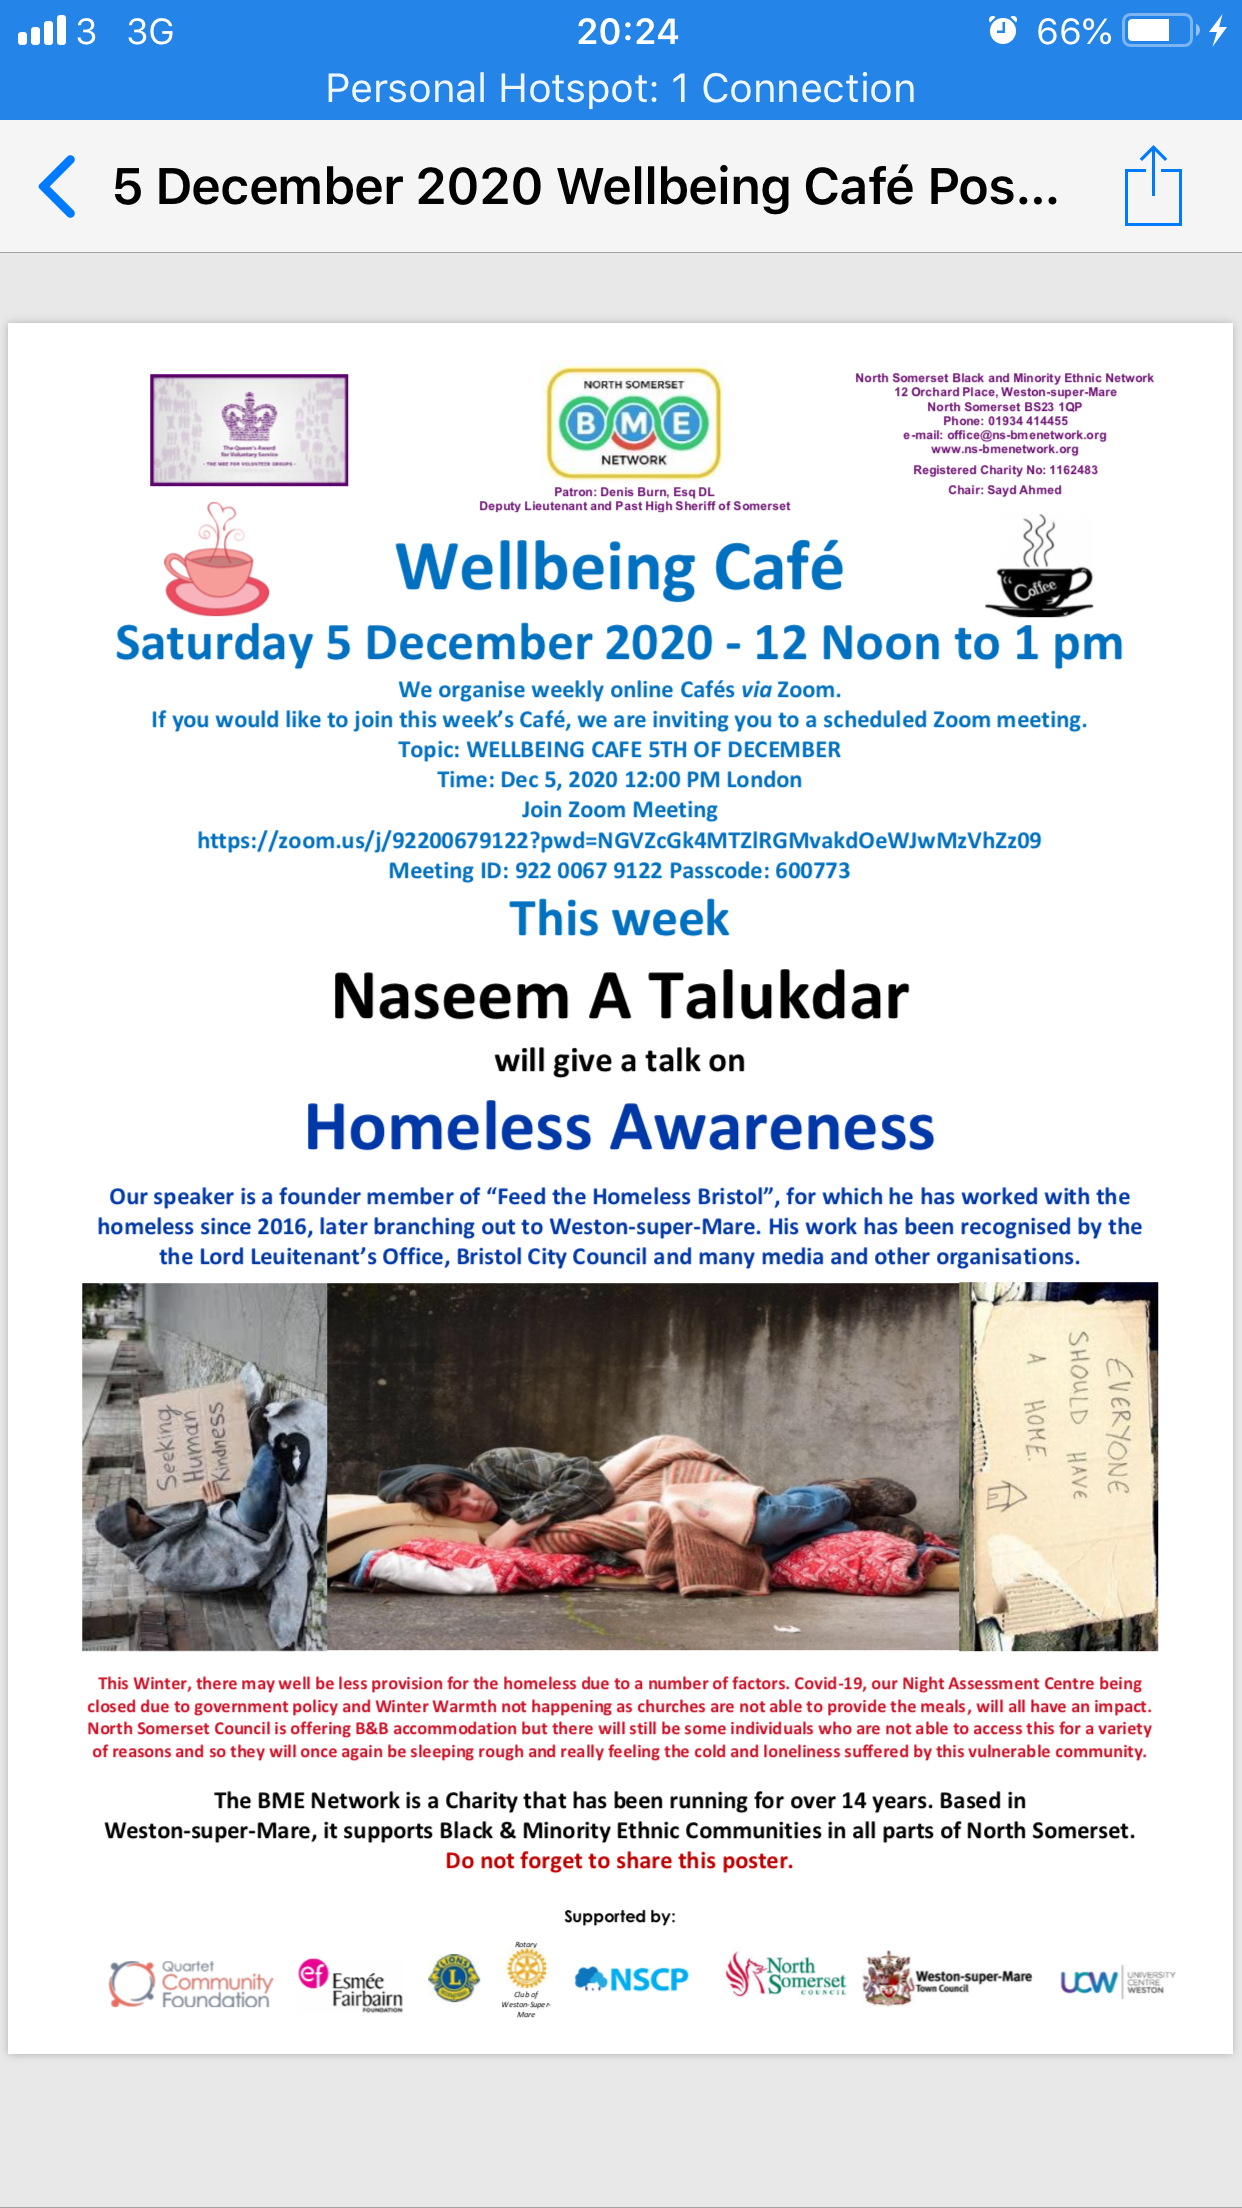 Homeless Awareness